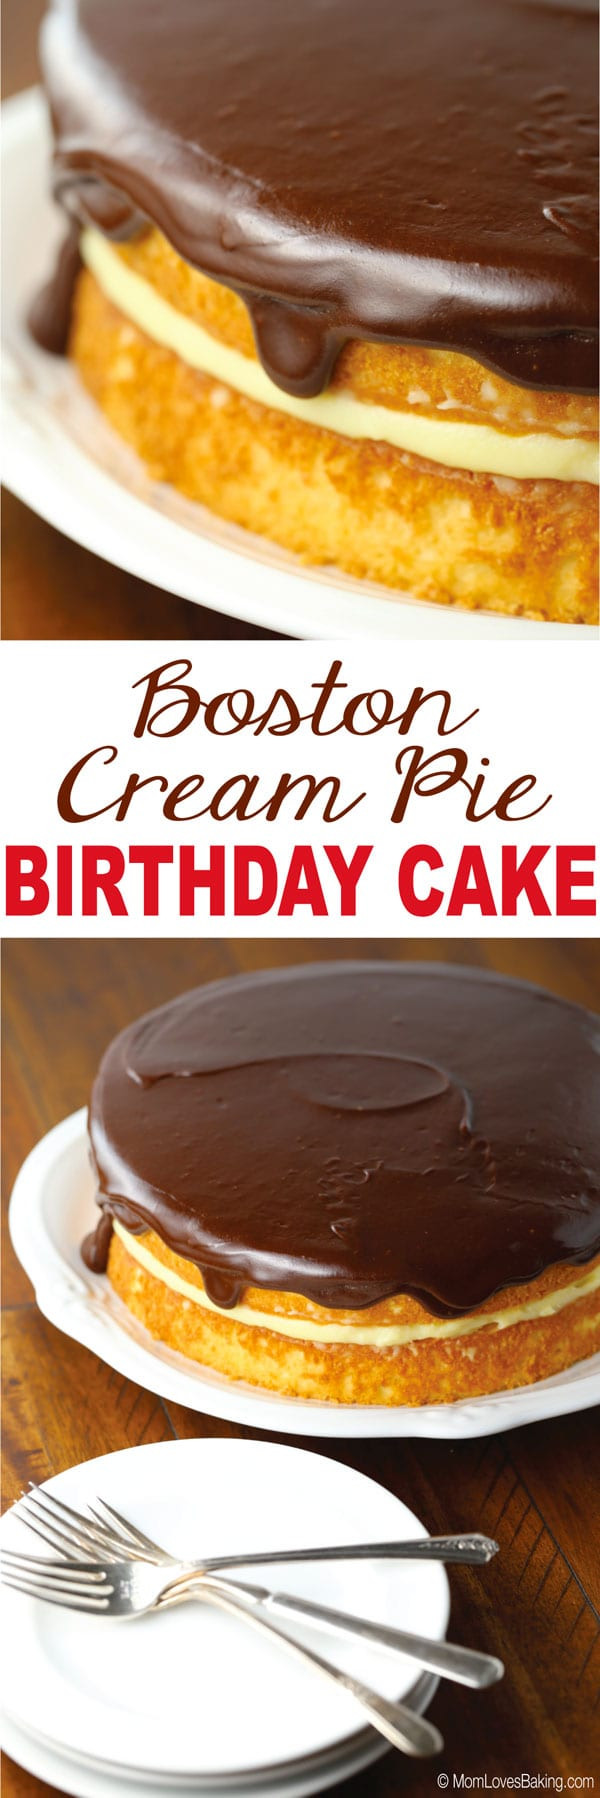 Birthday Cakes Boston
 Boston Cream Pie Birthday Cake Mom Loves Baking